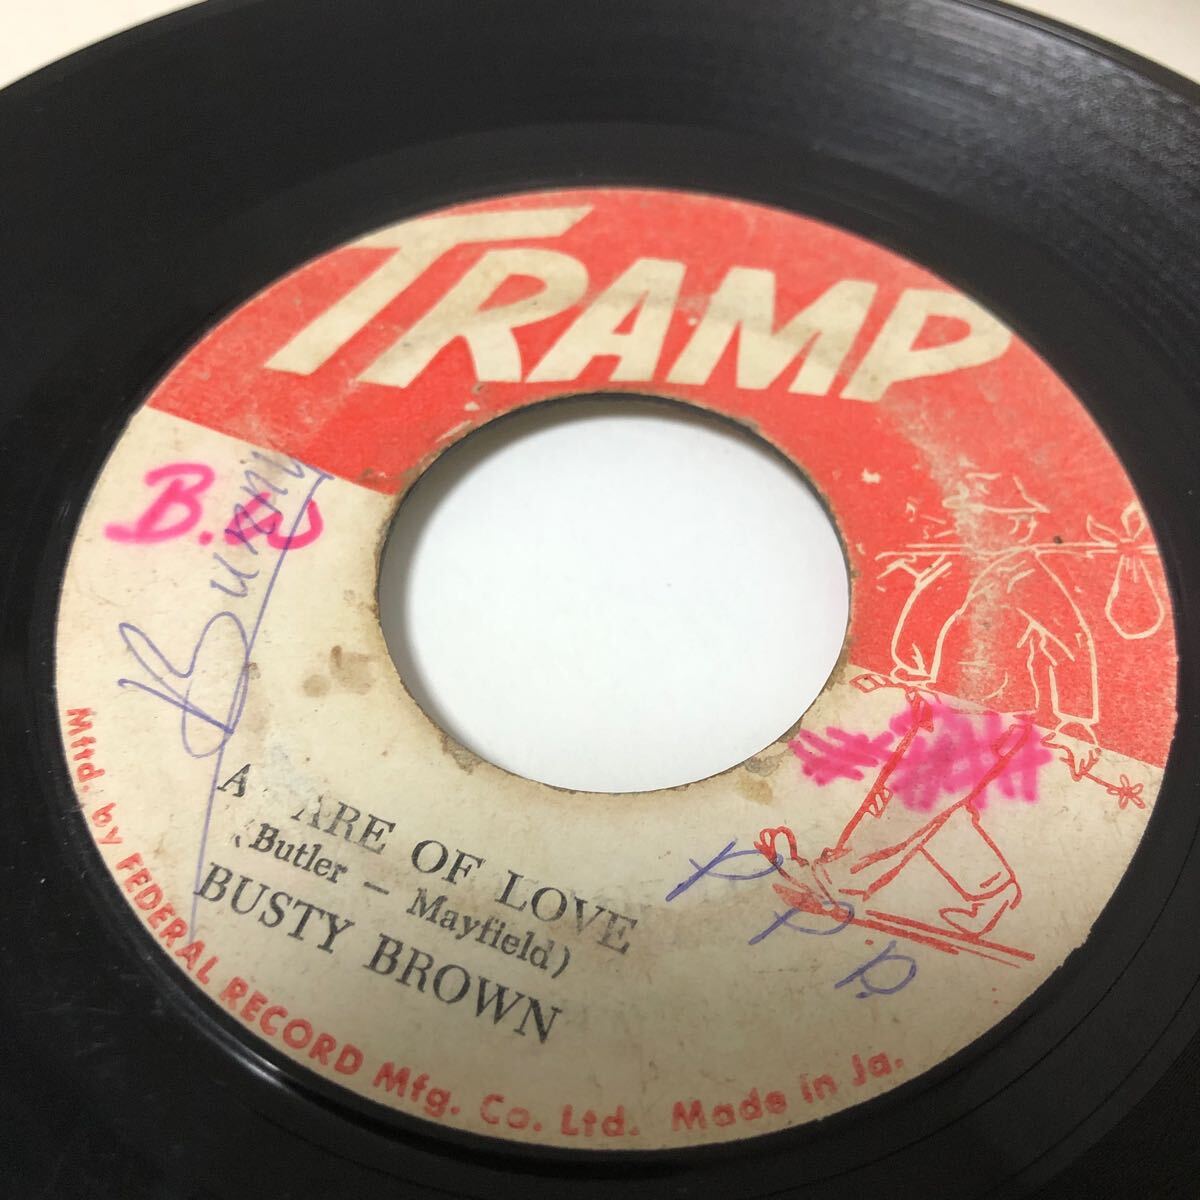  Busty Brown Aware Of Love / Hard Way To Go Roots Lovers Rock Reggae Dub ルーツ dubレゲエ ダブ 12 レコード Deep tramp の画像2